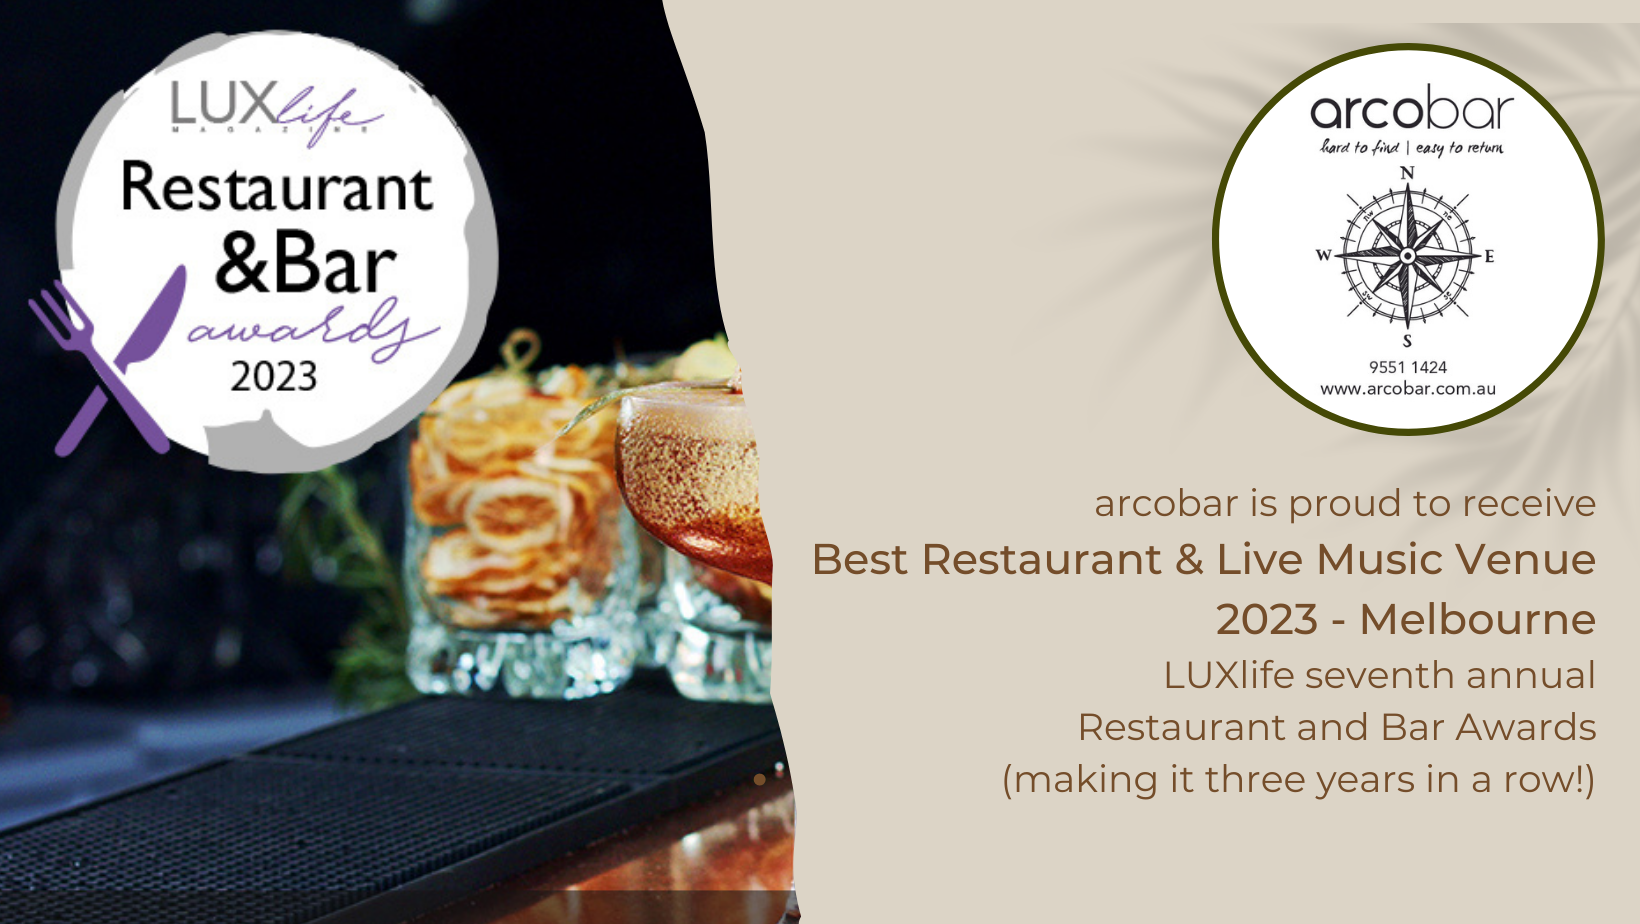 arcobar has been awarded 2023 LUXlife Best Restaurant & Live Music Venue (Melbourne)